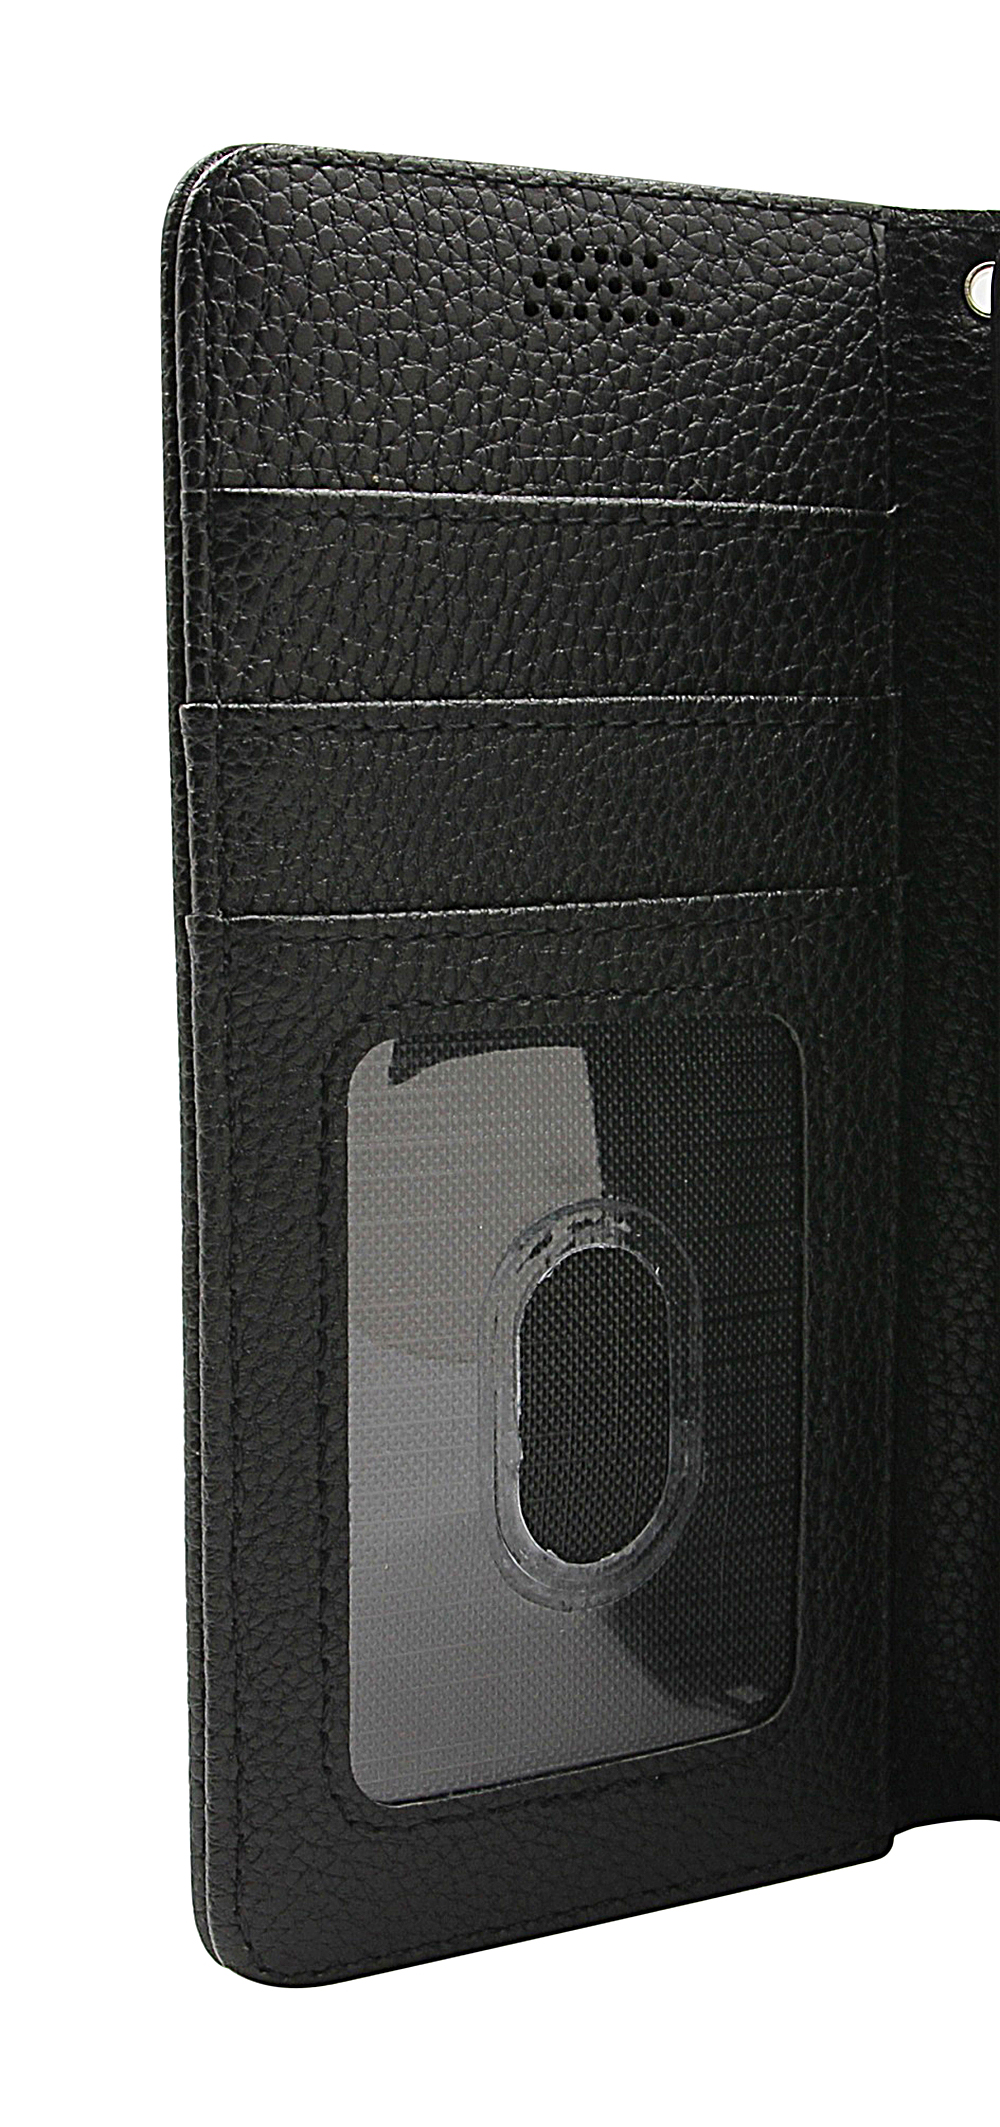 New Standcase Wallet Samsung Galaxy S21 5G (G991B)